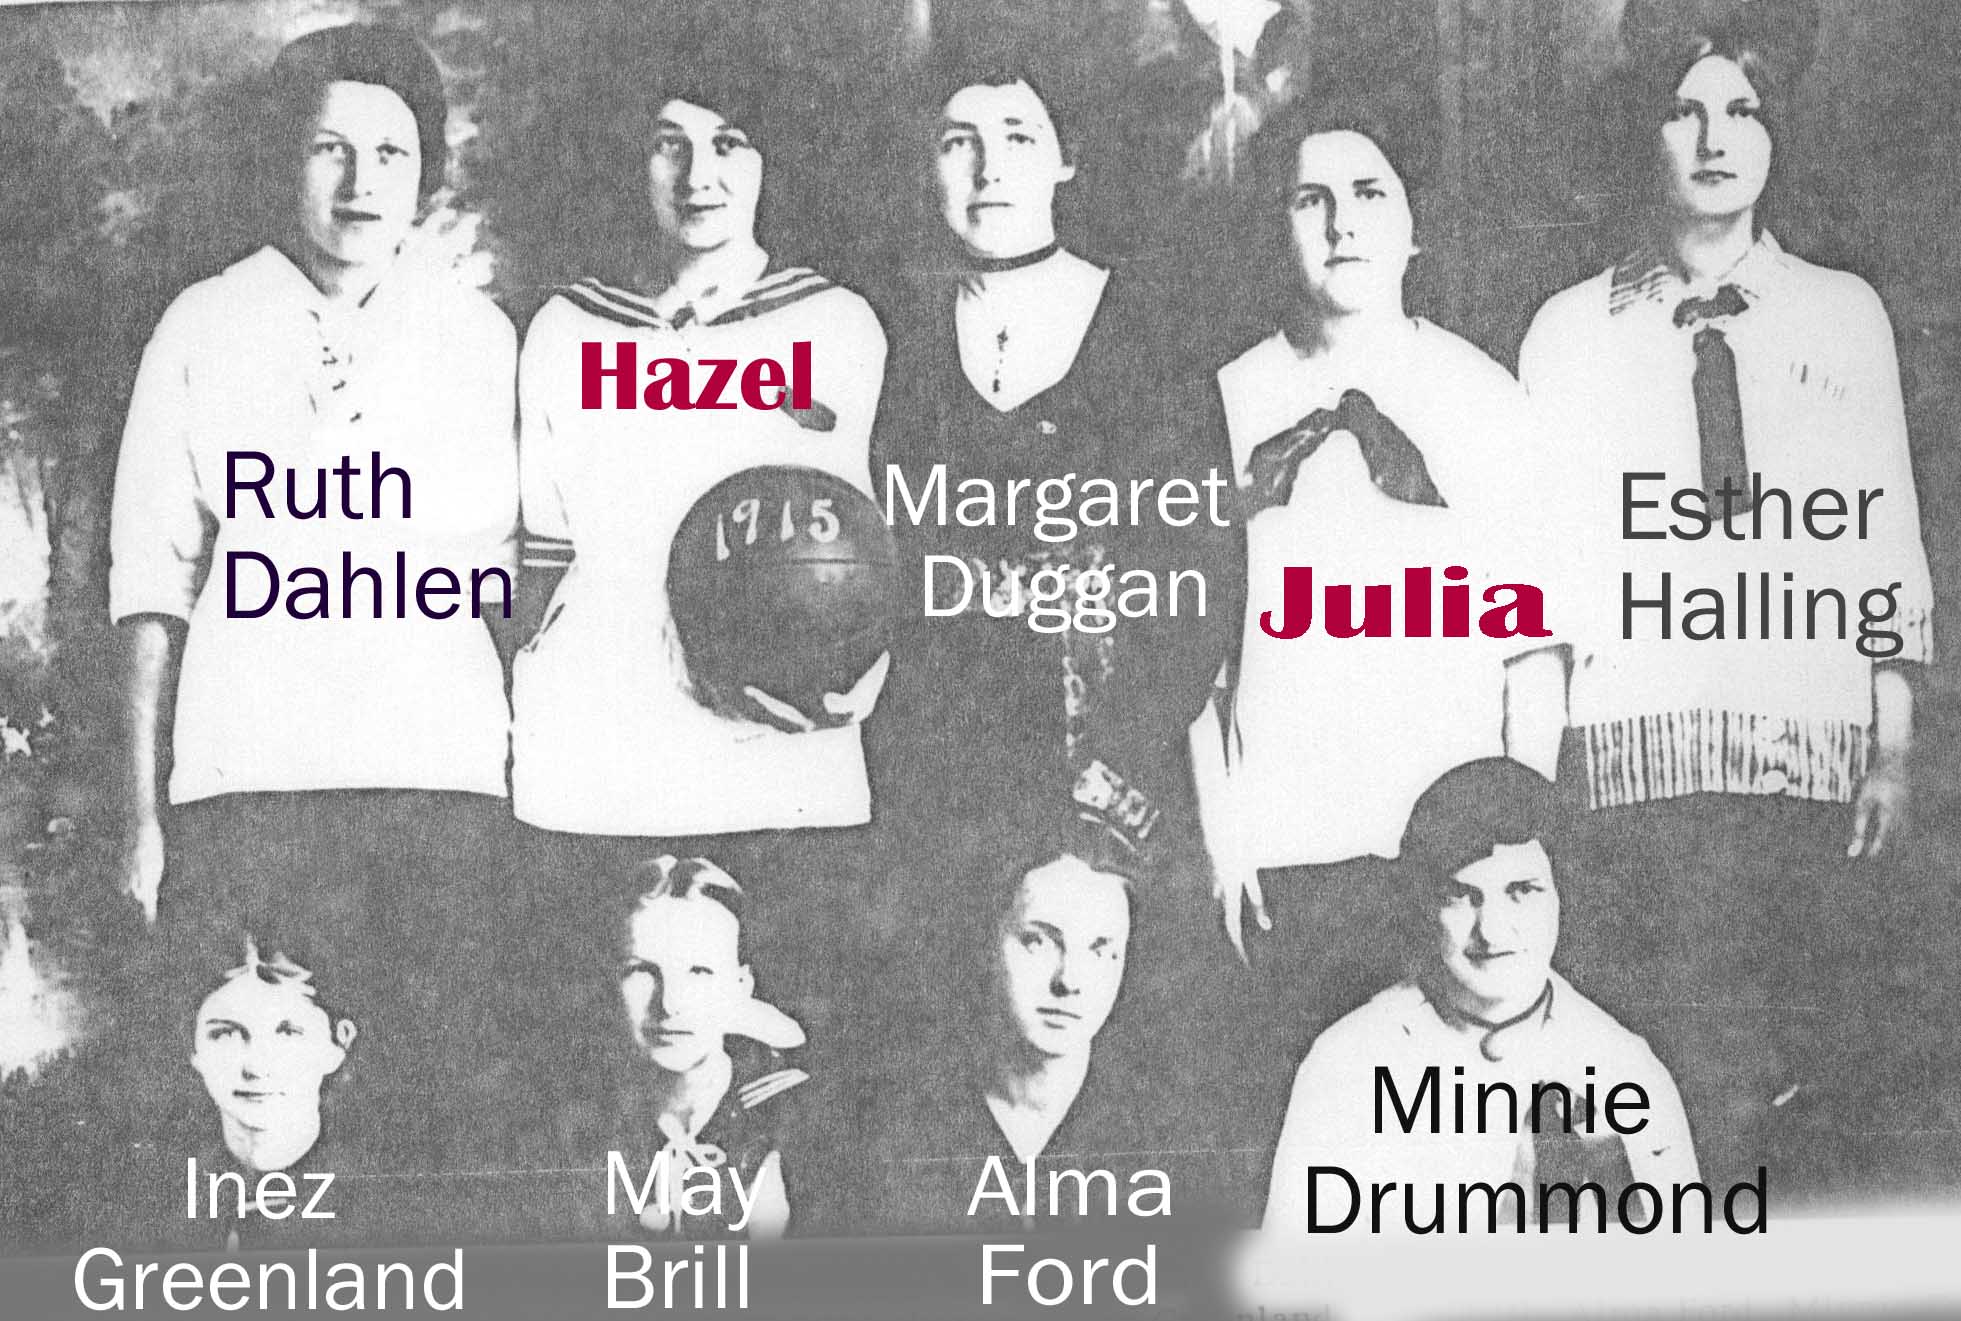 The 1915 Binford Women's Basketball Team: Ruth Dahlen, Hazel Maurer (Alm),  Margaret Duggan, Julia Alm, Esther Halling, Inez Greenland, May Brill, Alma Ford, and Minnie Drummond